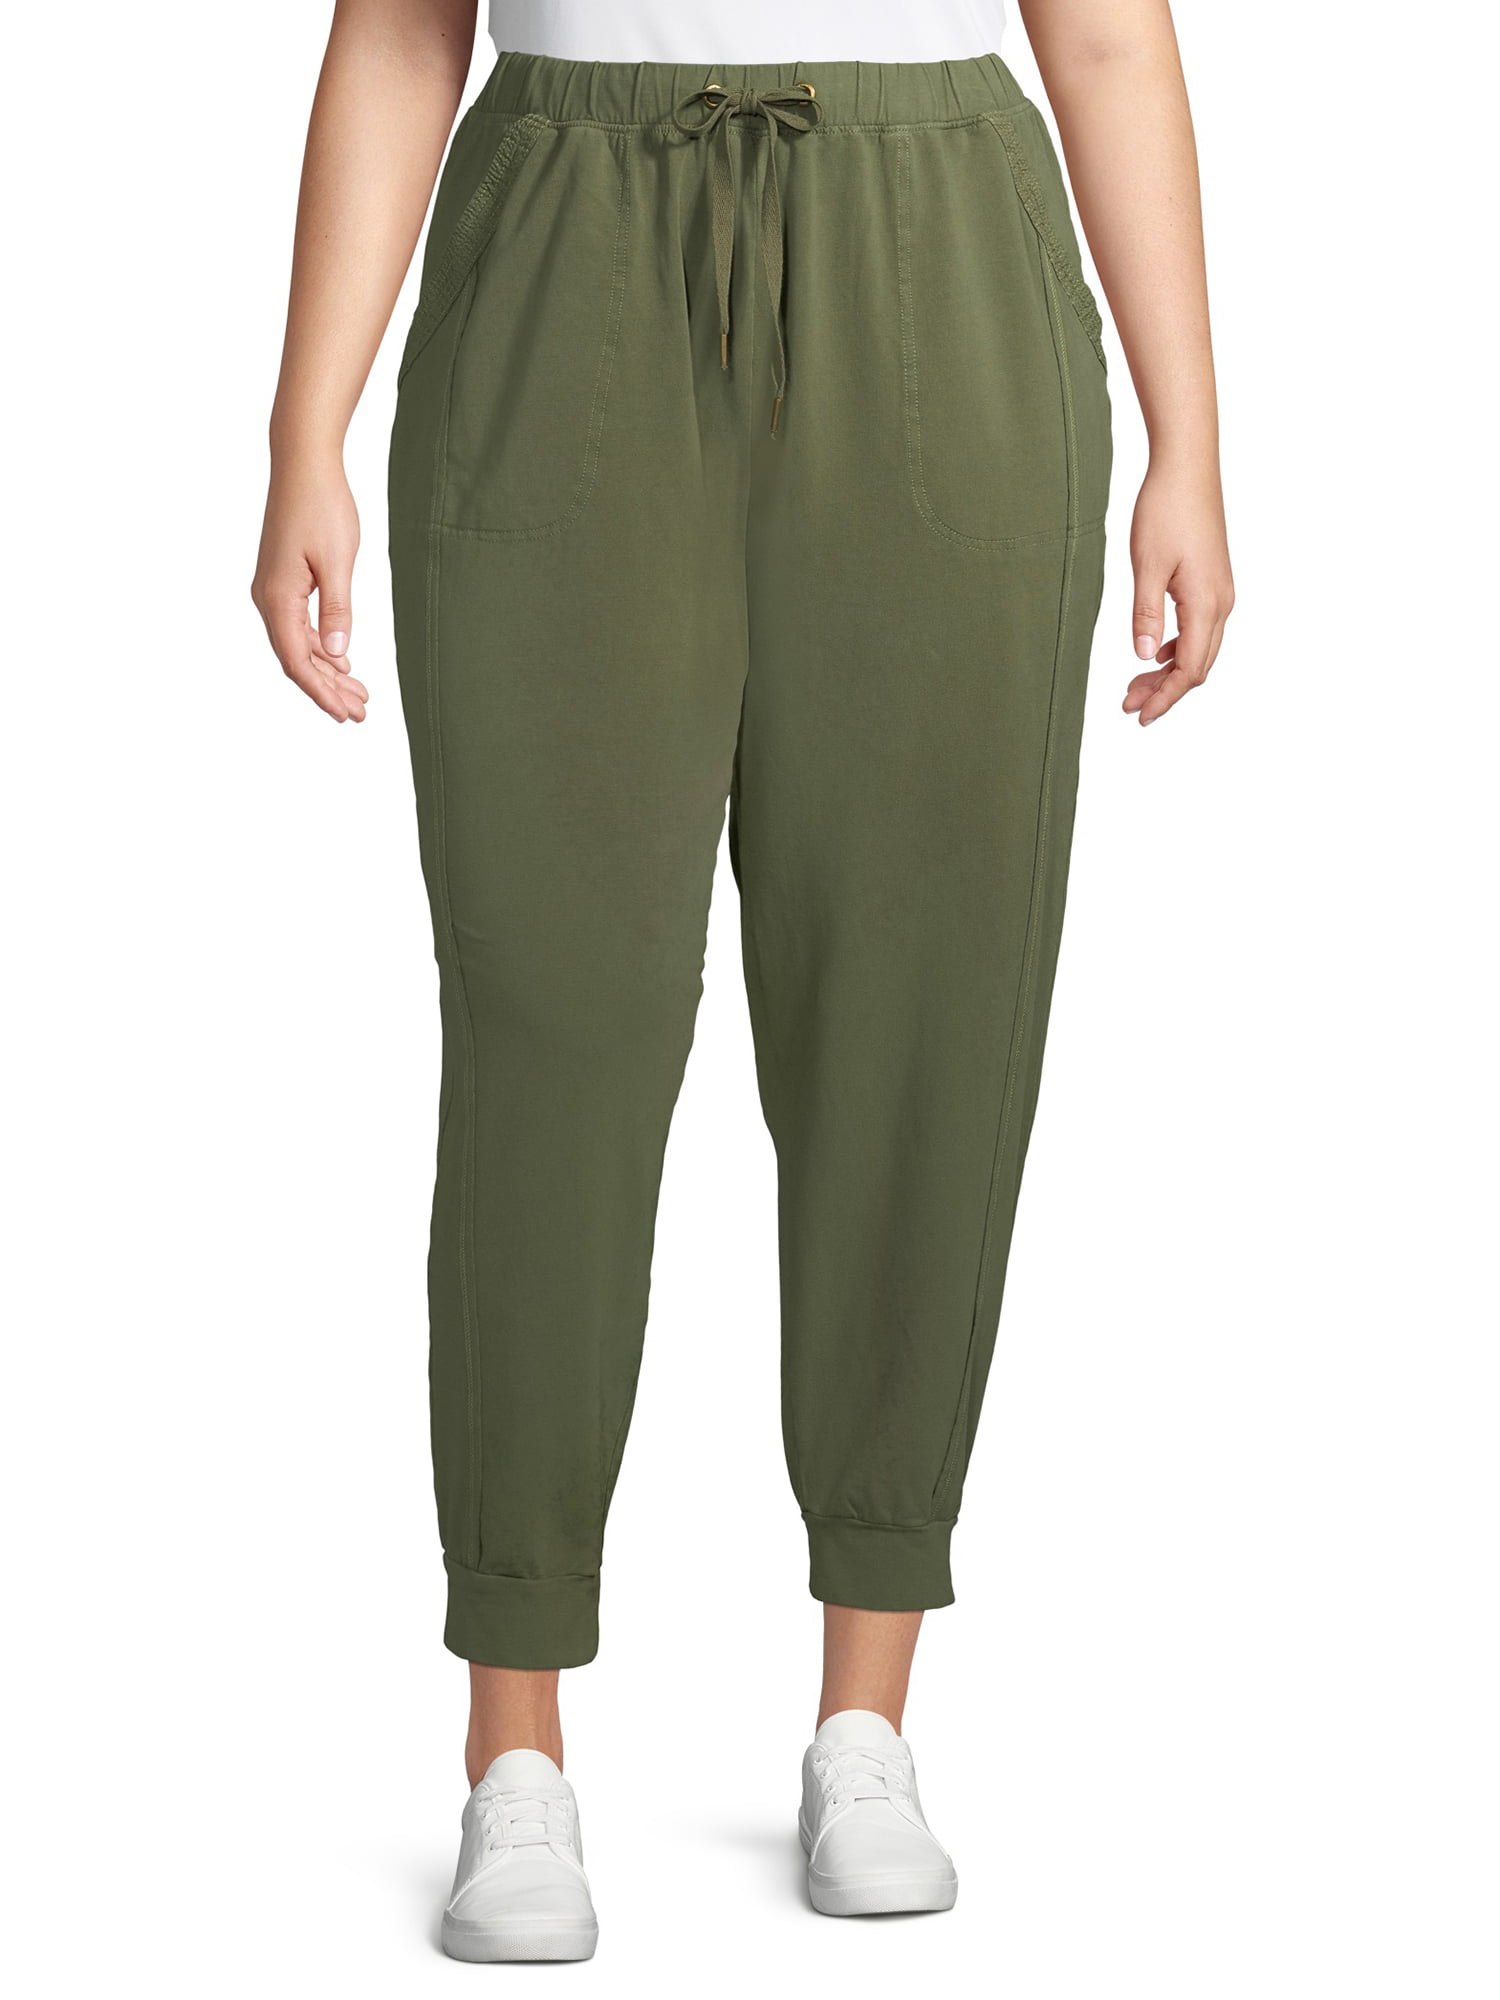 Terra & Sky Women's Plus Size Knit Joggers - Walmart.com